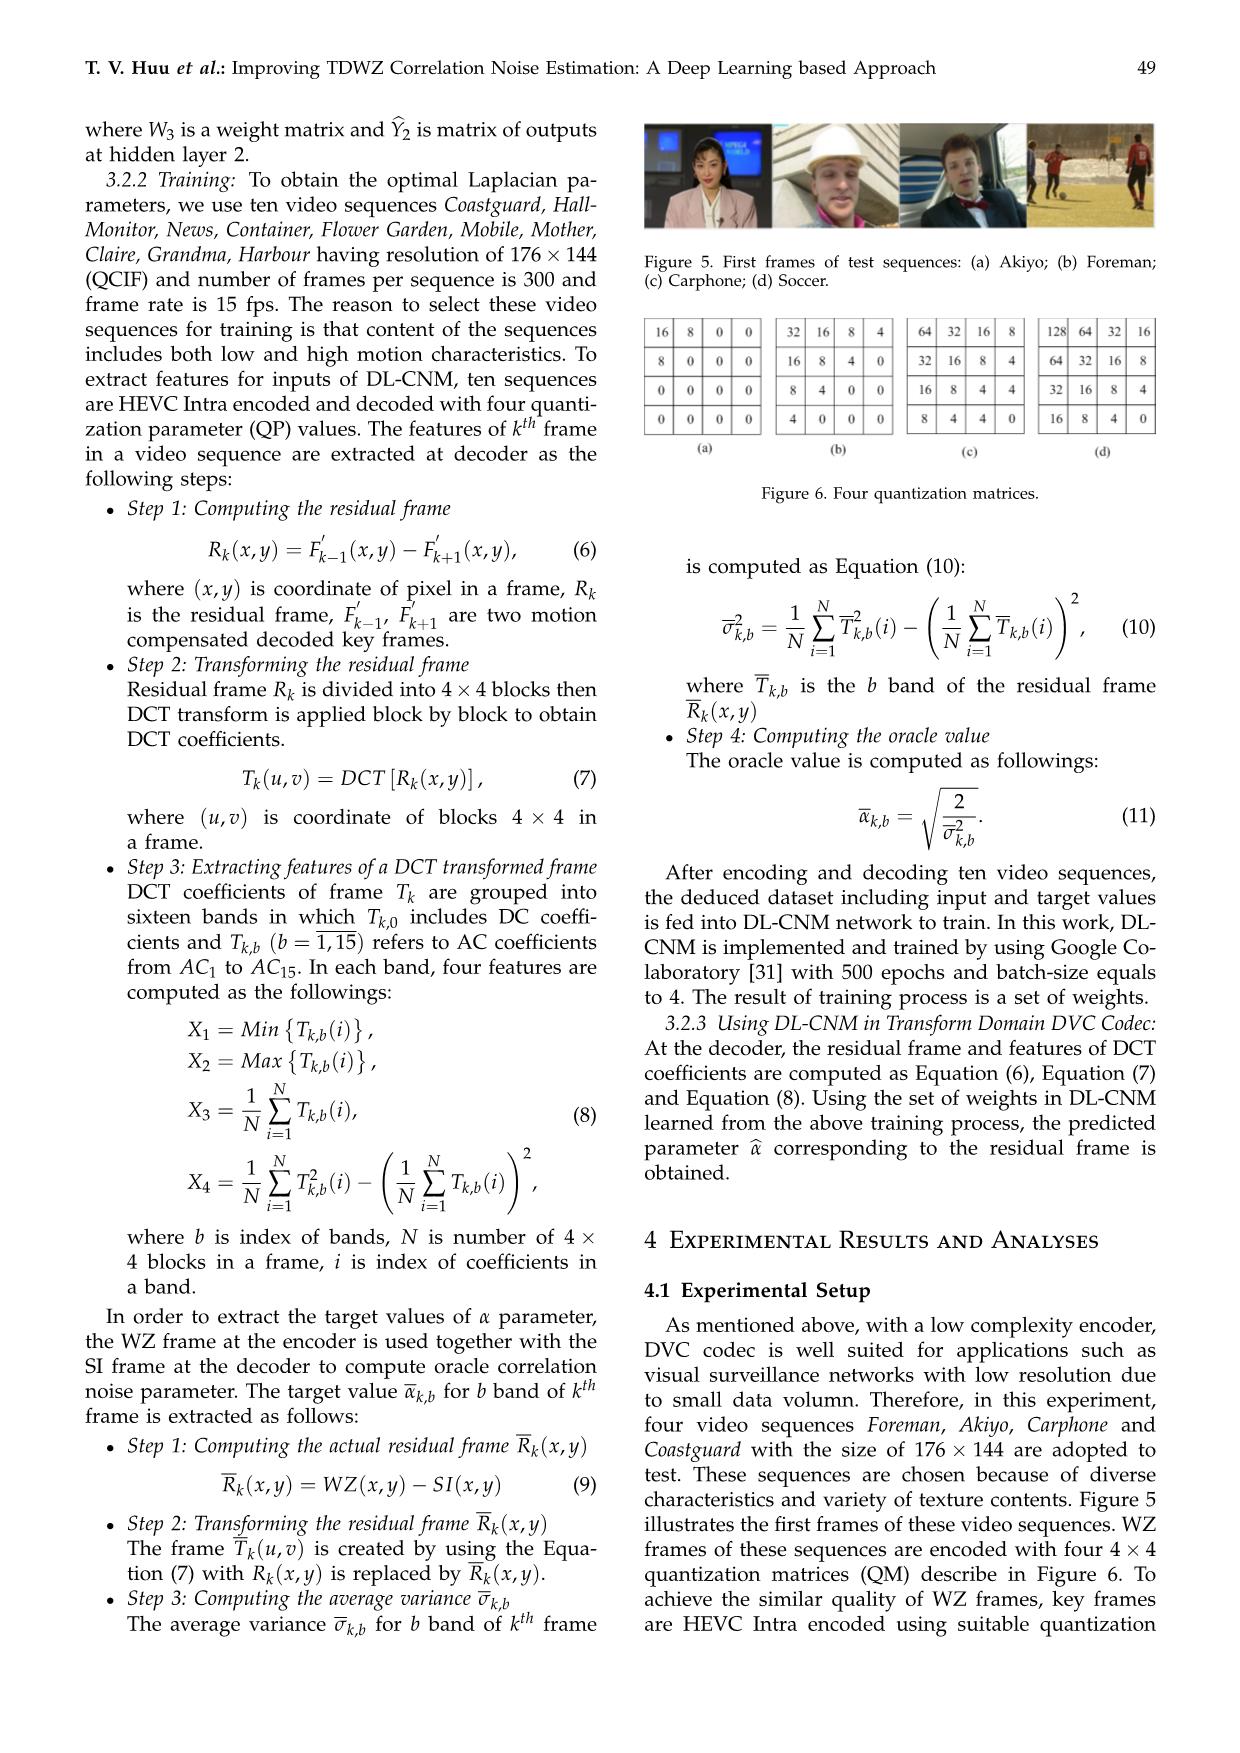 Improving TDWZ correlation noise estimation: A deep learning based approach trang 5